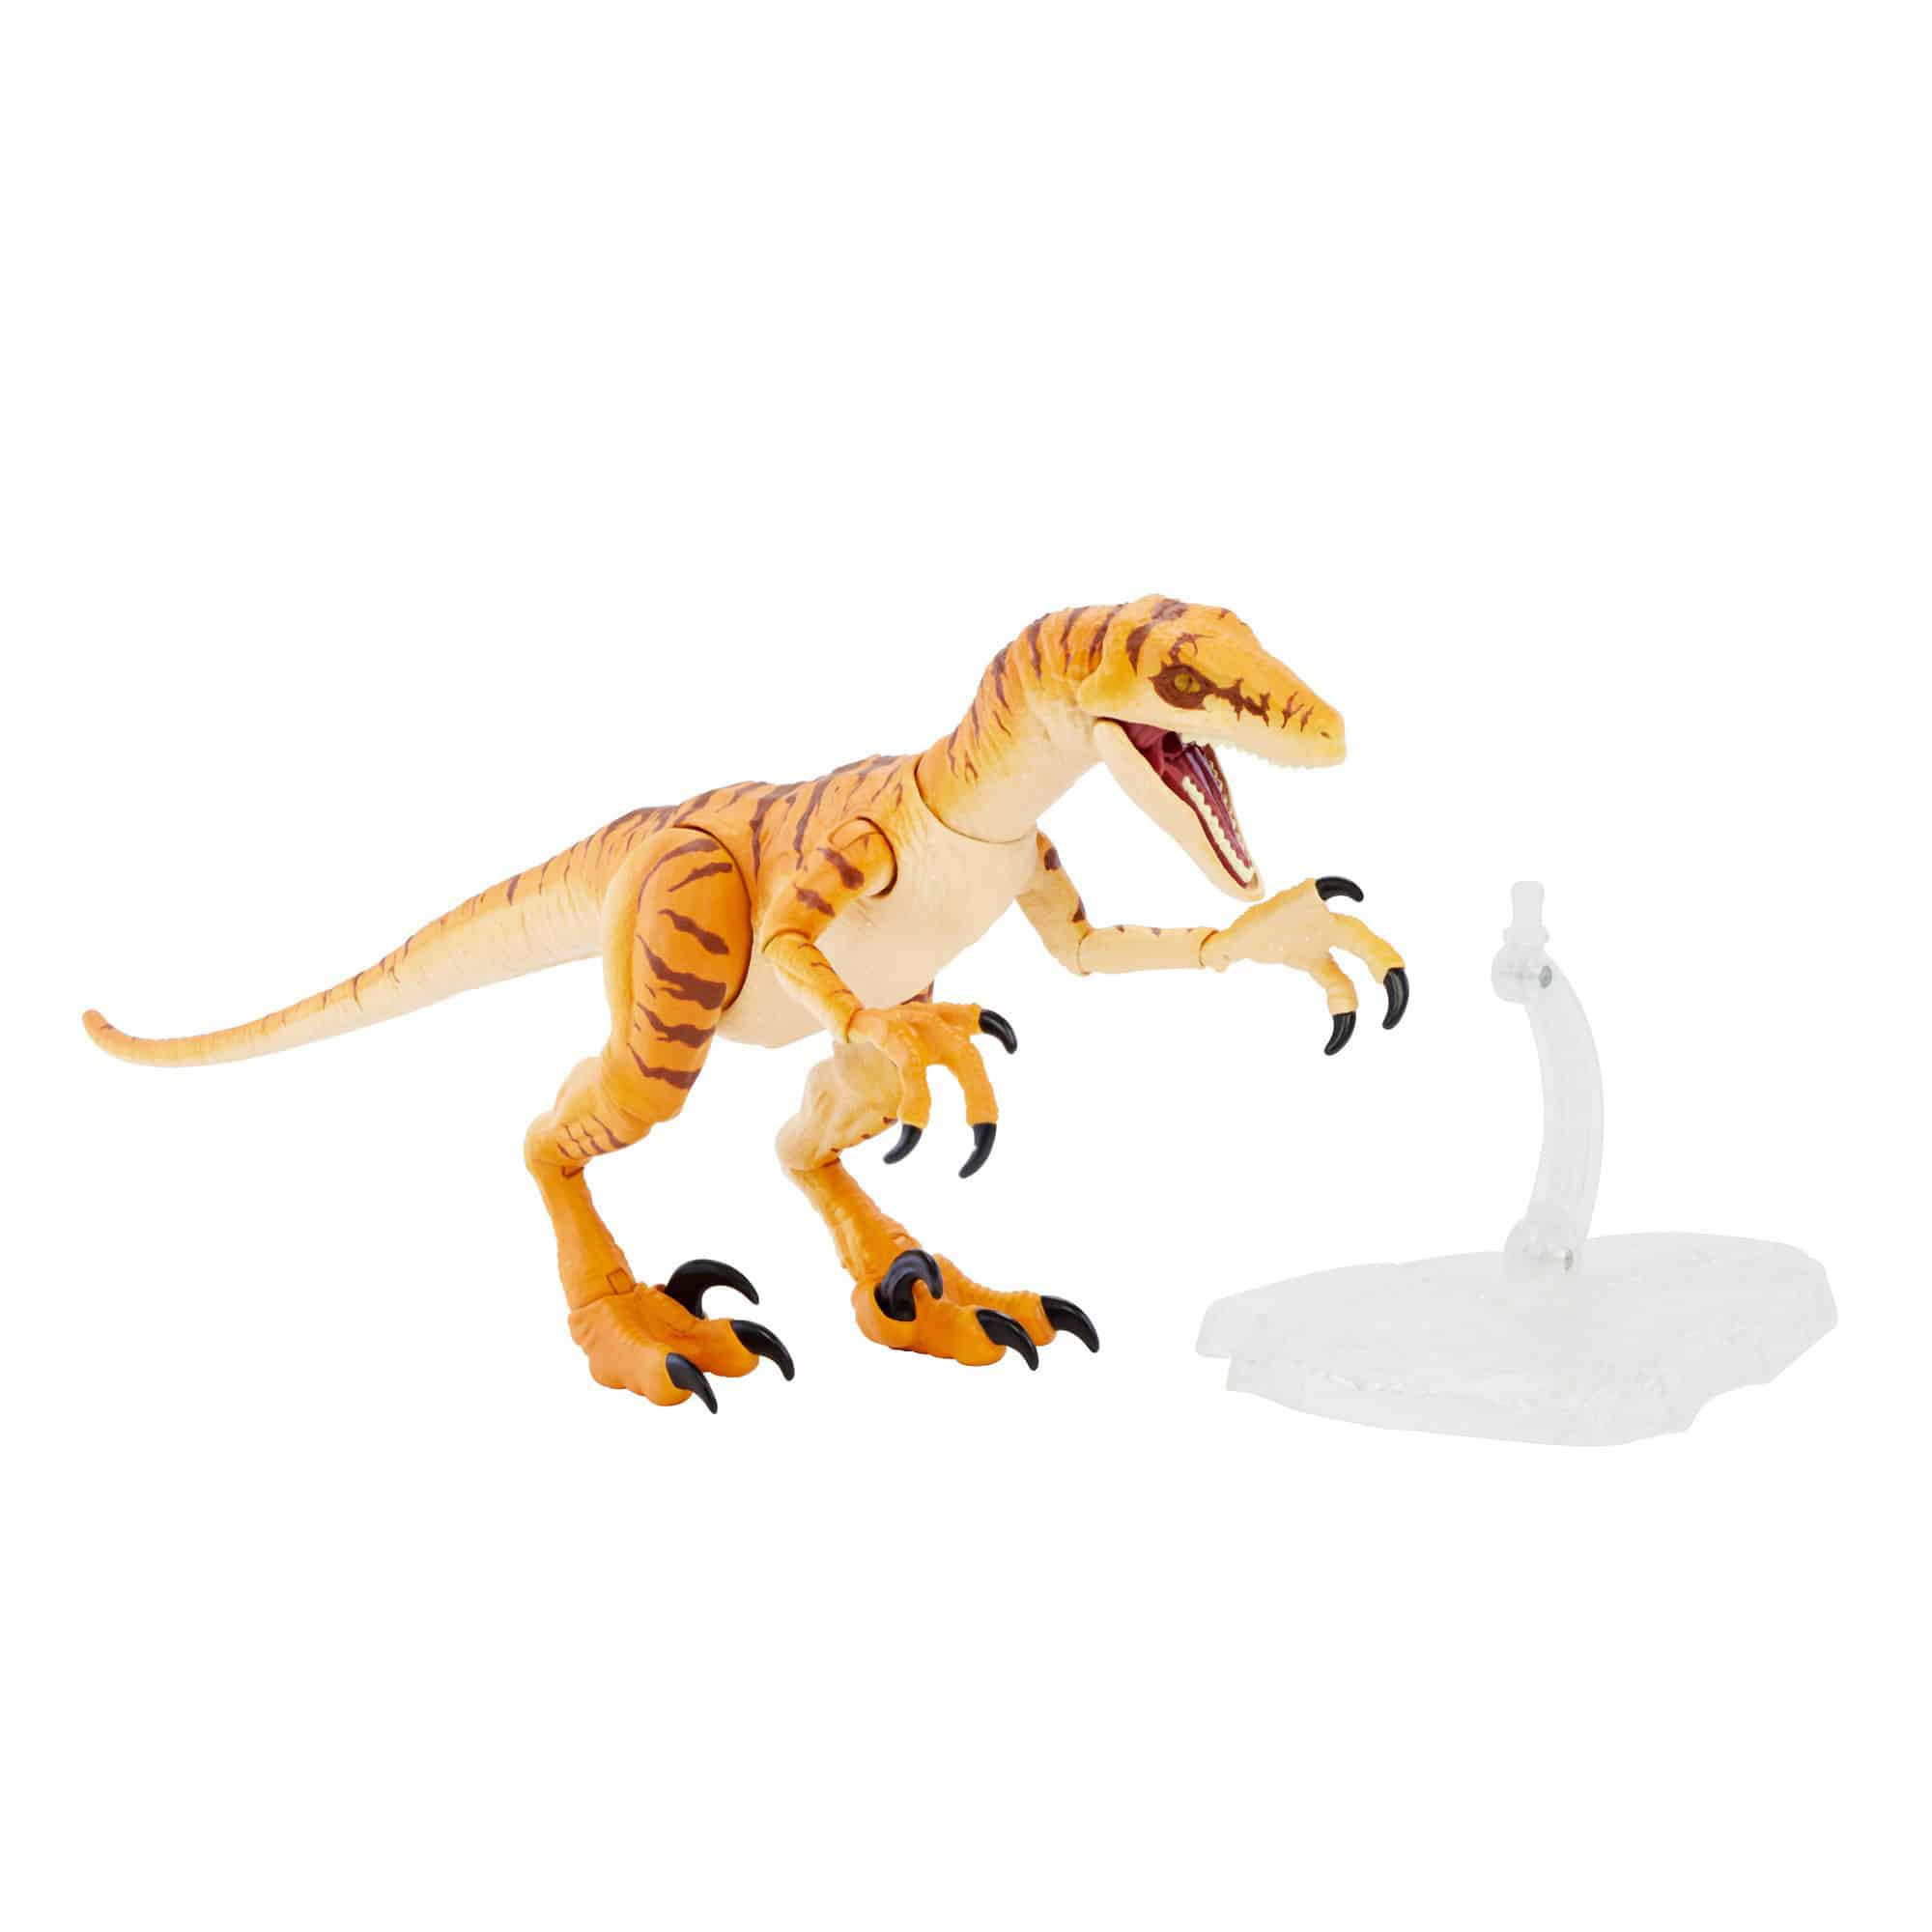 Jurassic World - Amber Dinosaur Assortment